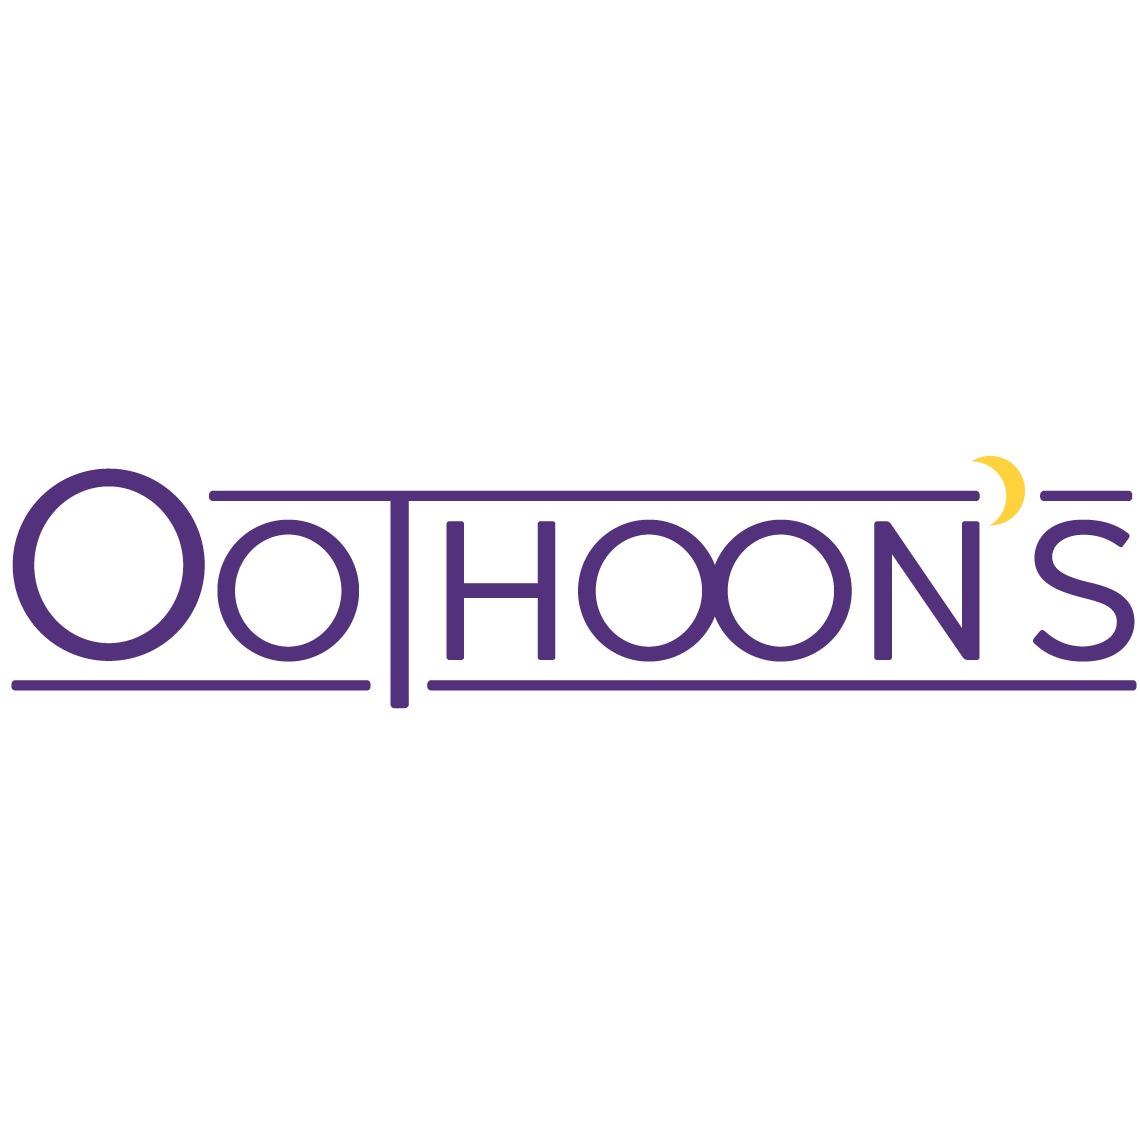 Oothoon's Logo